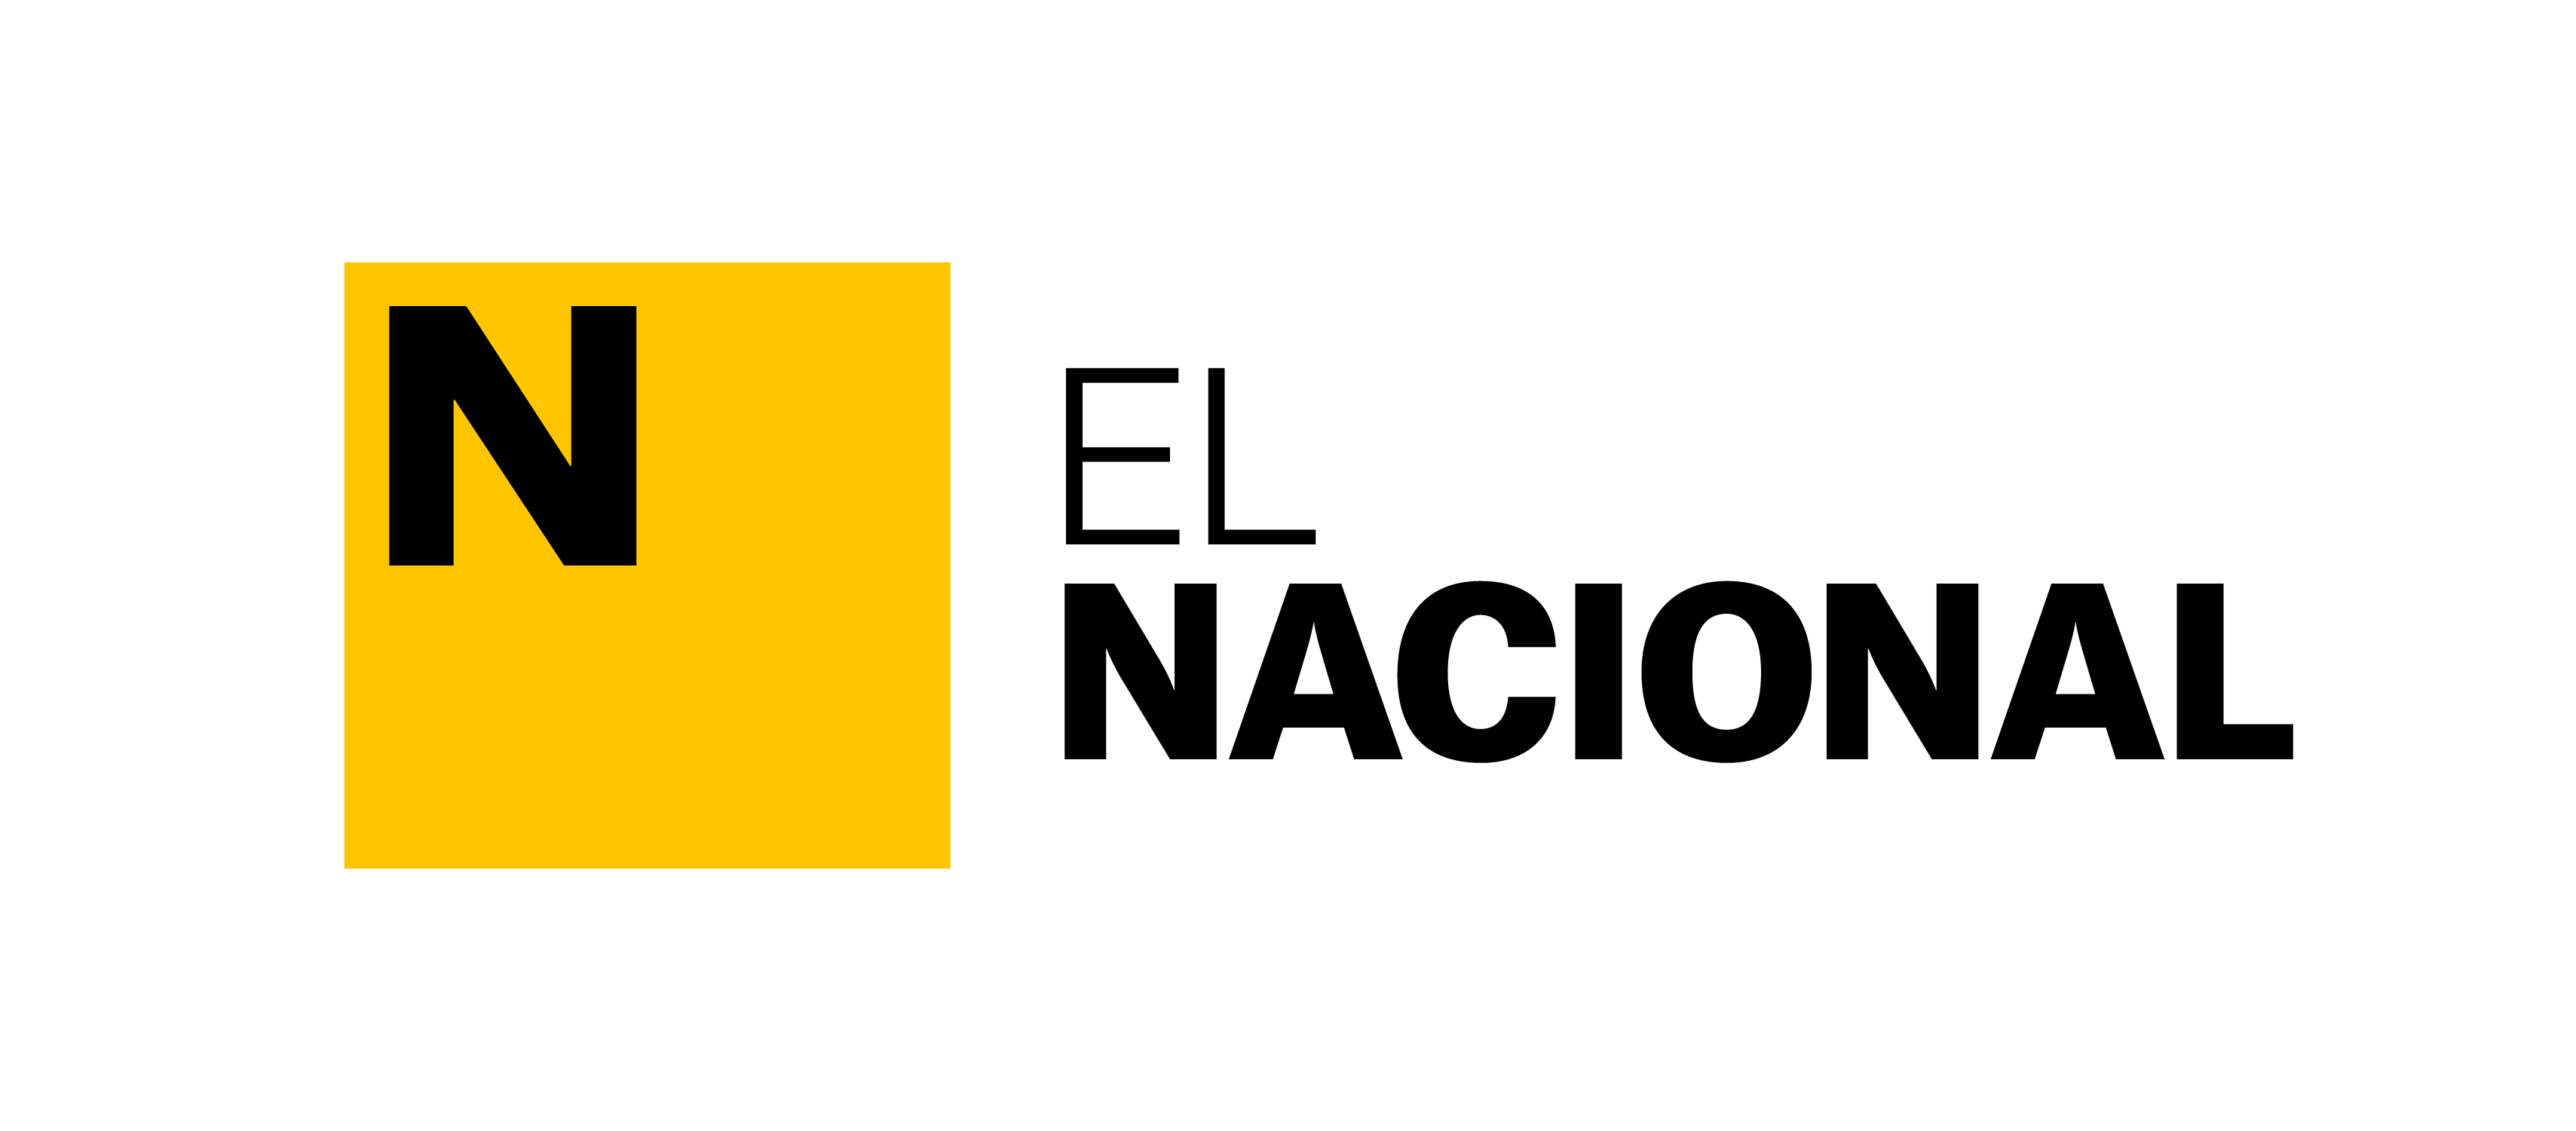 Elnacional logo